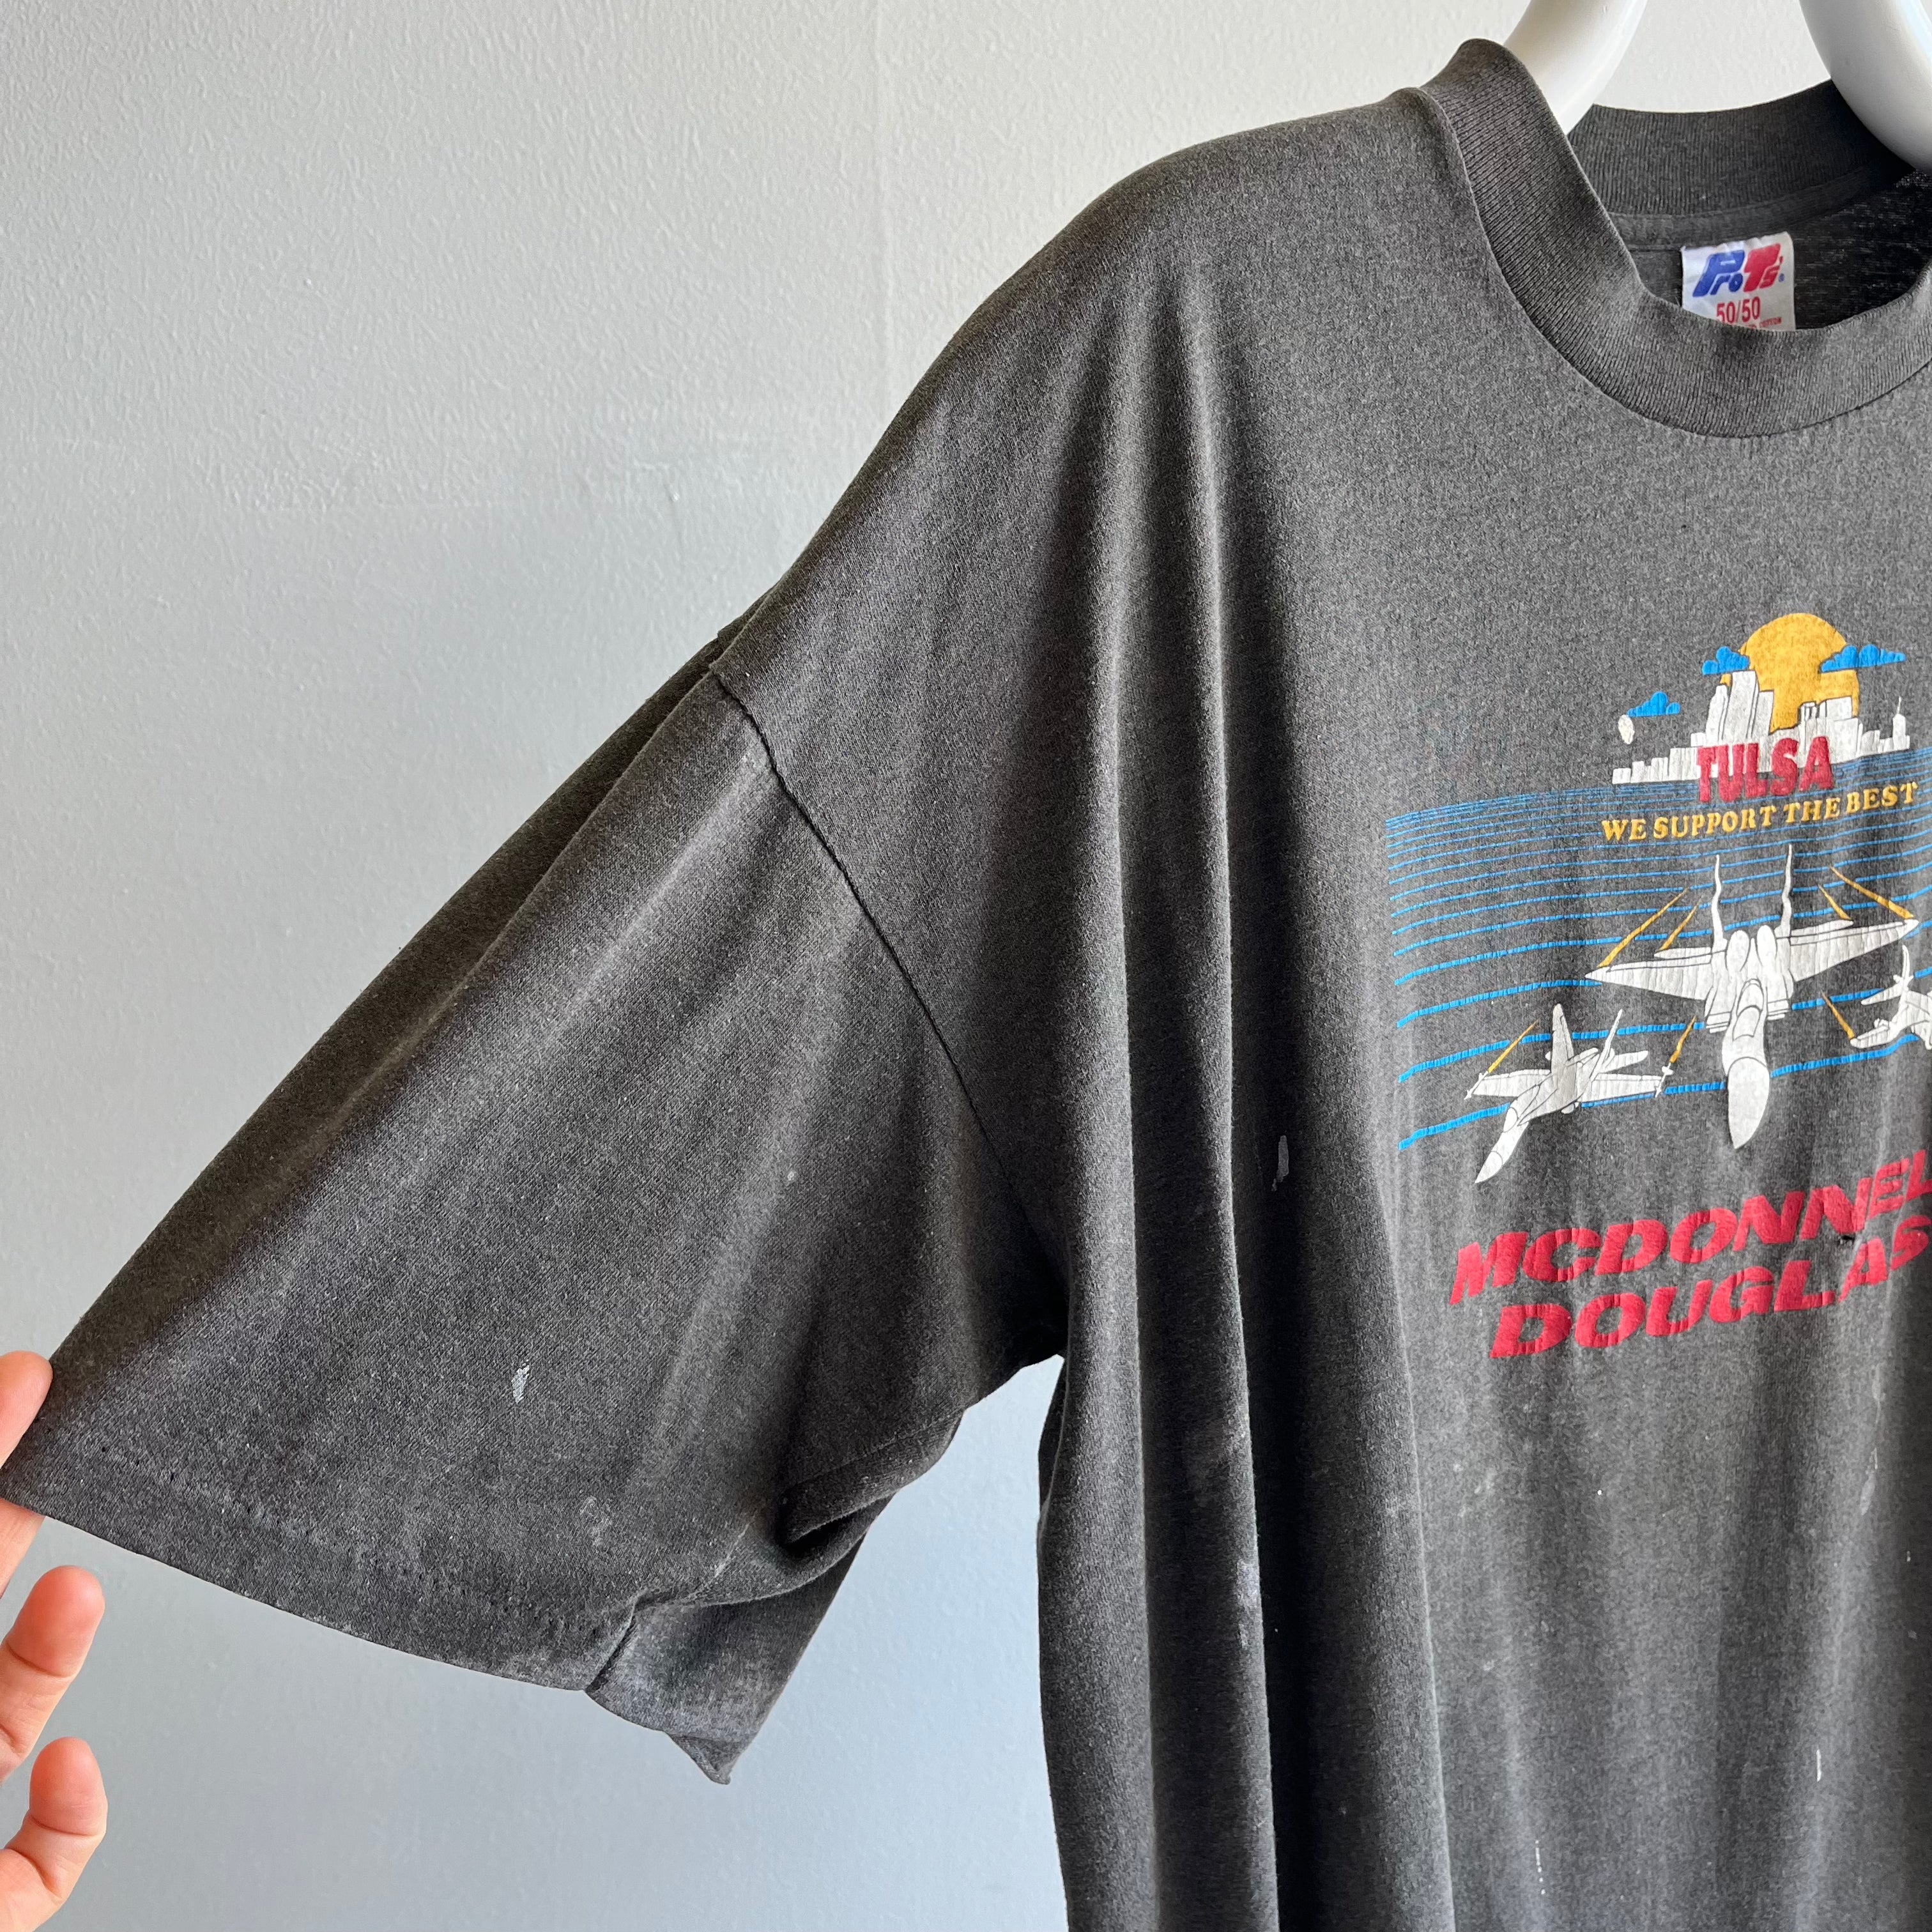 1990s McDonnel Douglas Tulsa - Aerospace Bomber Plant that Closed in 1993 - T-Shirt